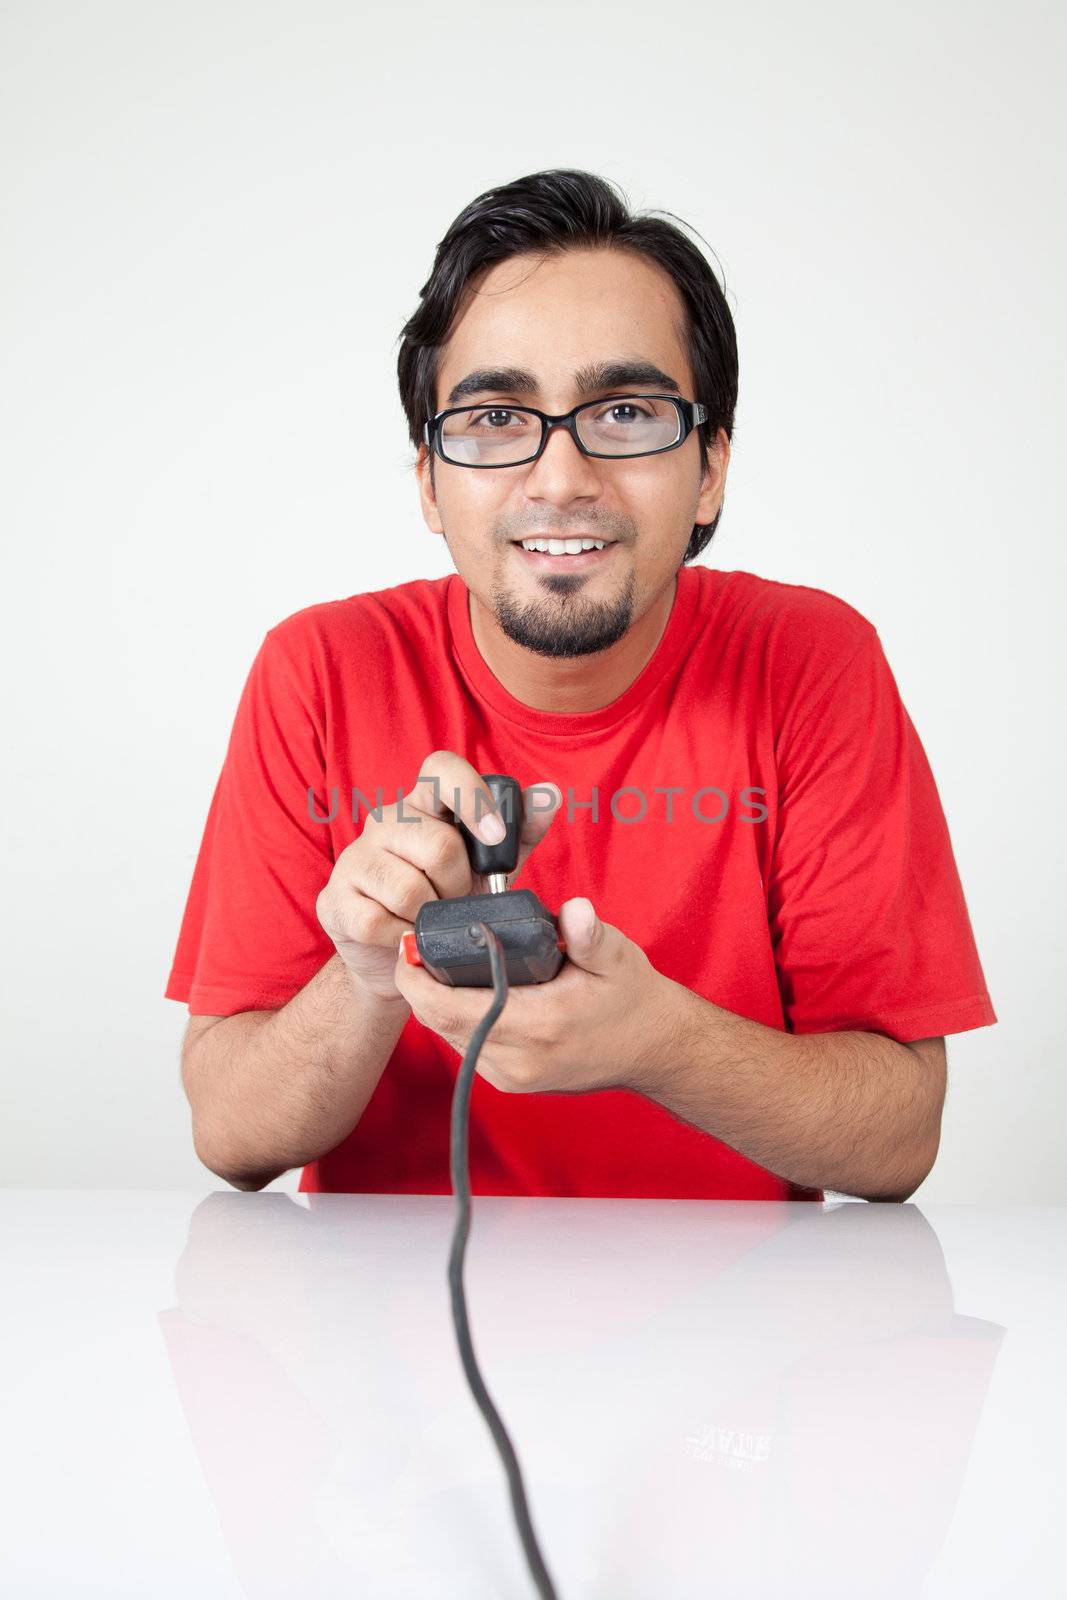 Nerd playing retro game, holding joystick by haiderazim